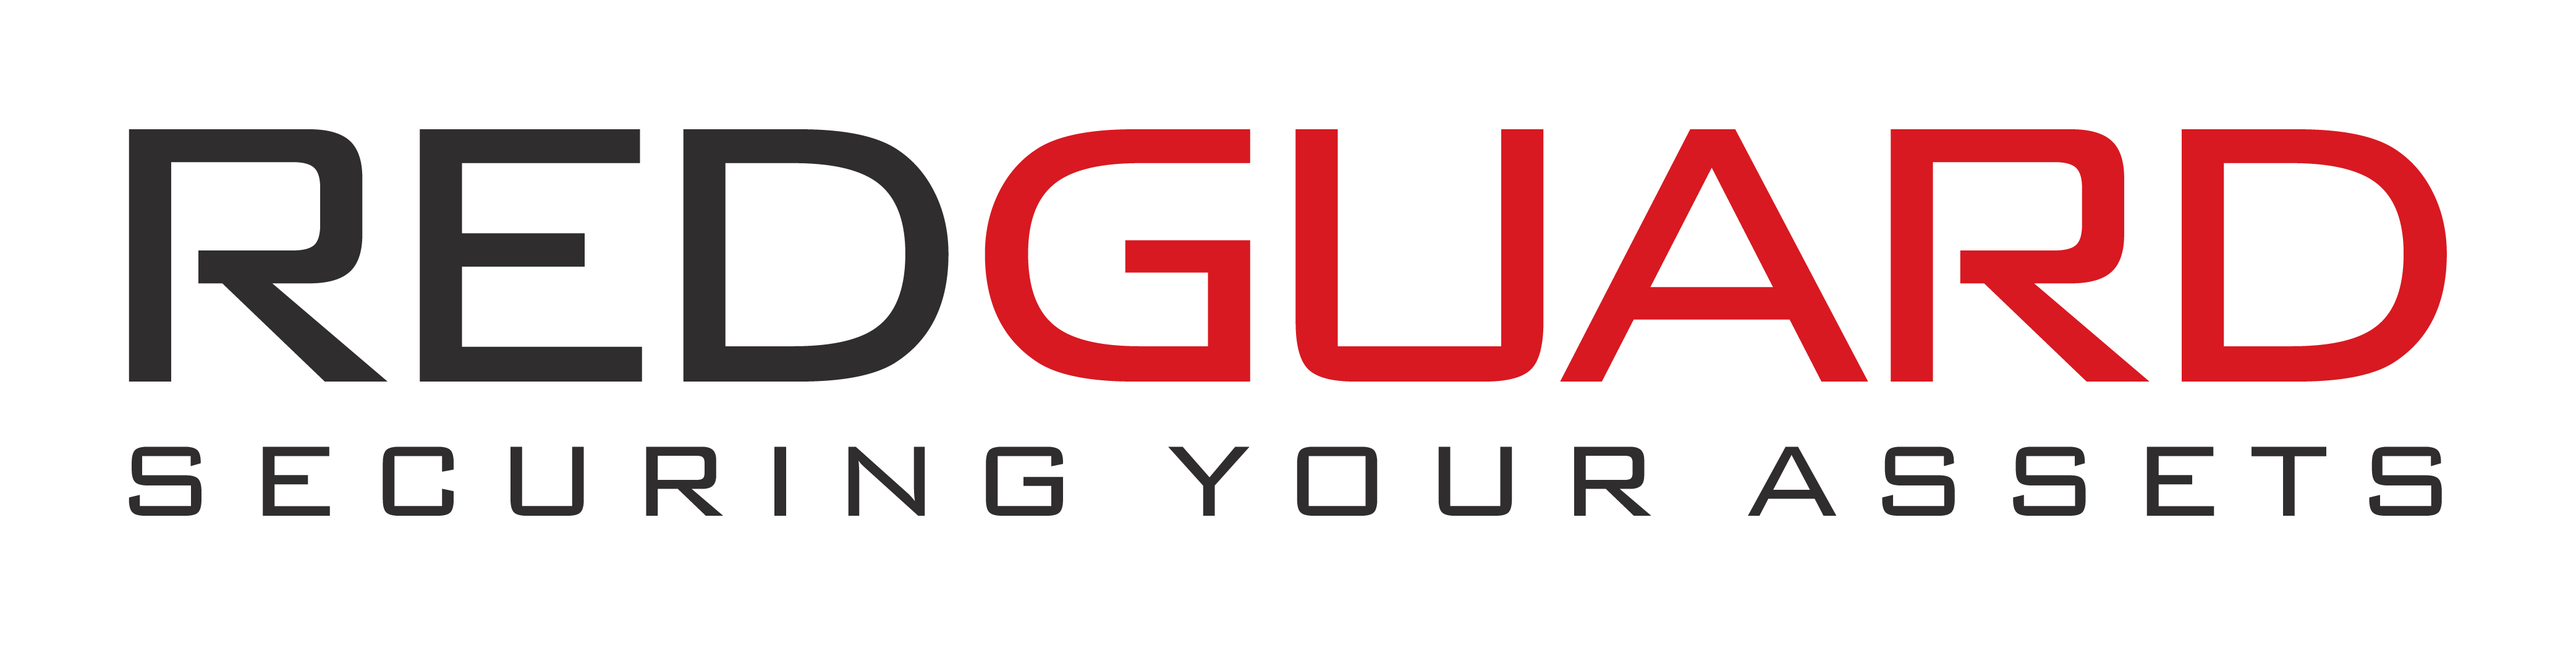 Logo Redguard AG